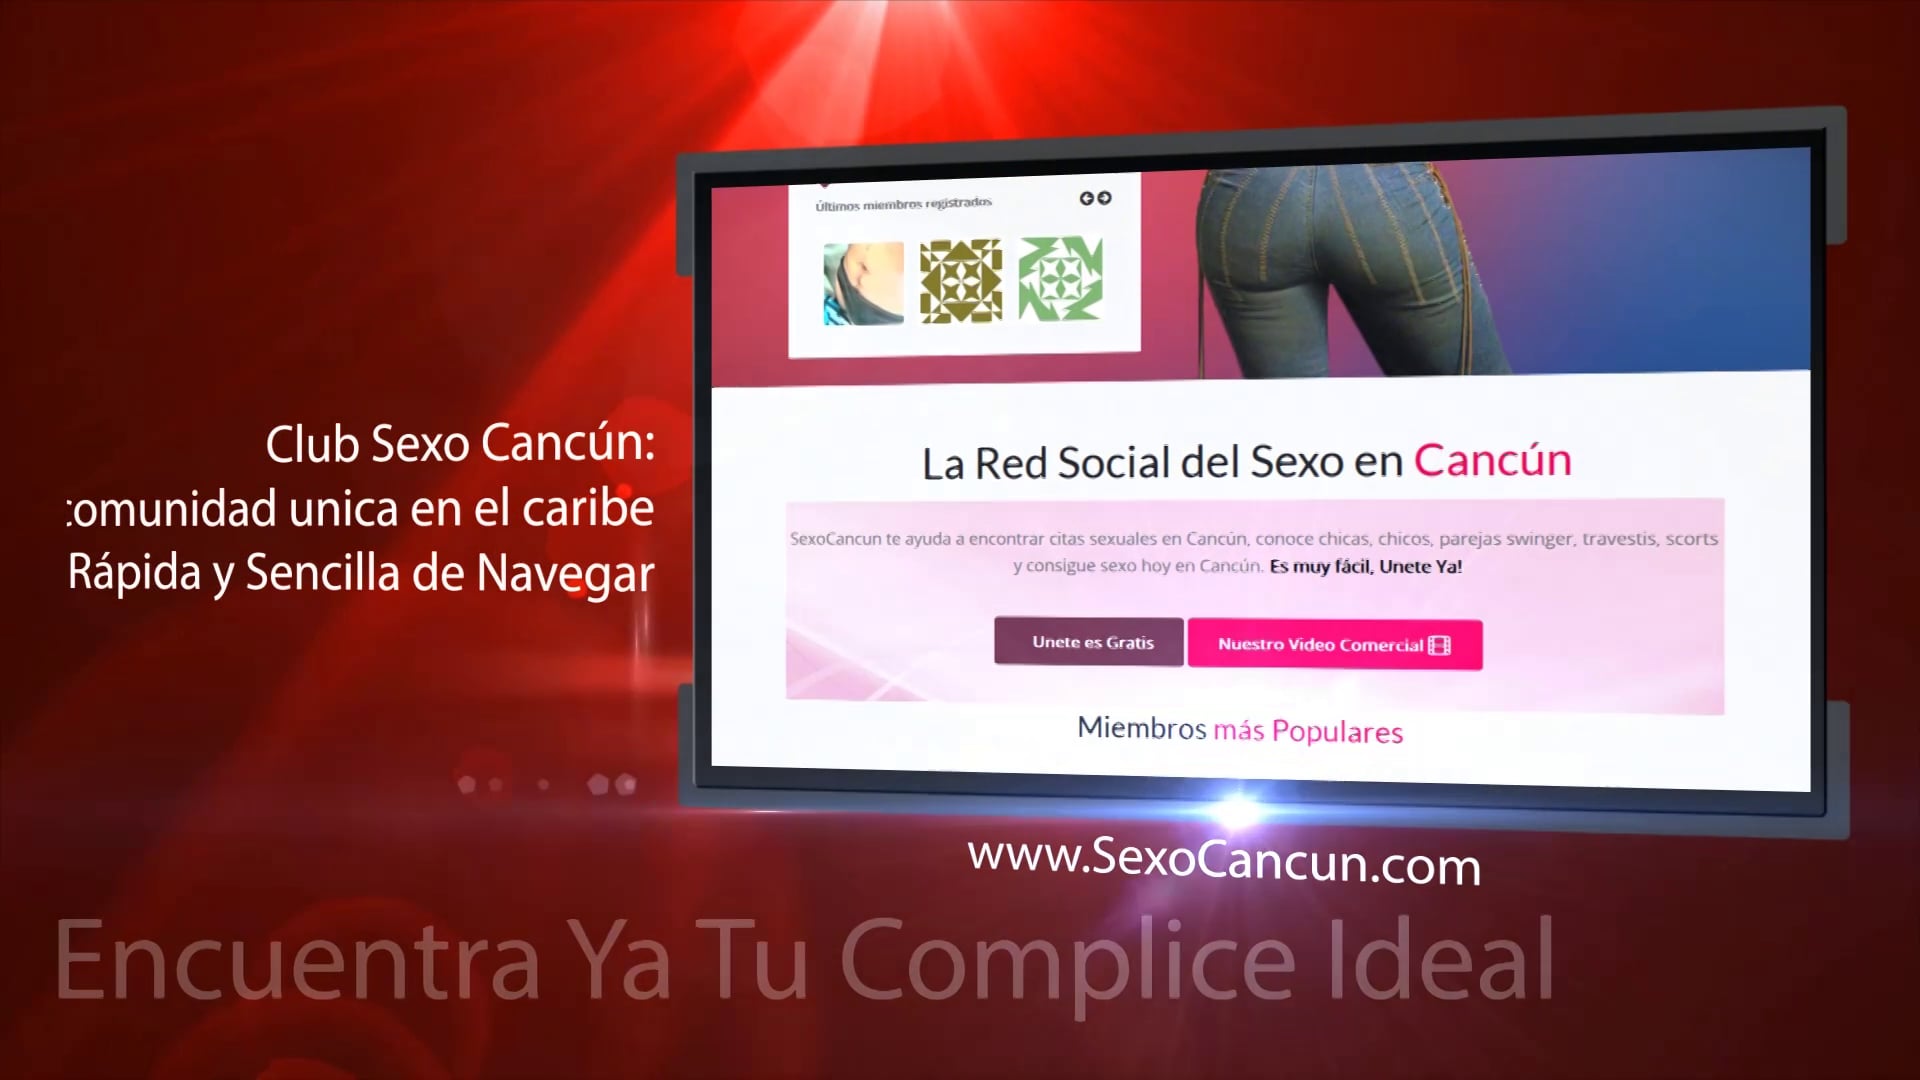 Sexo Cancun on Vimeo imagen